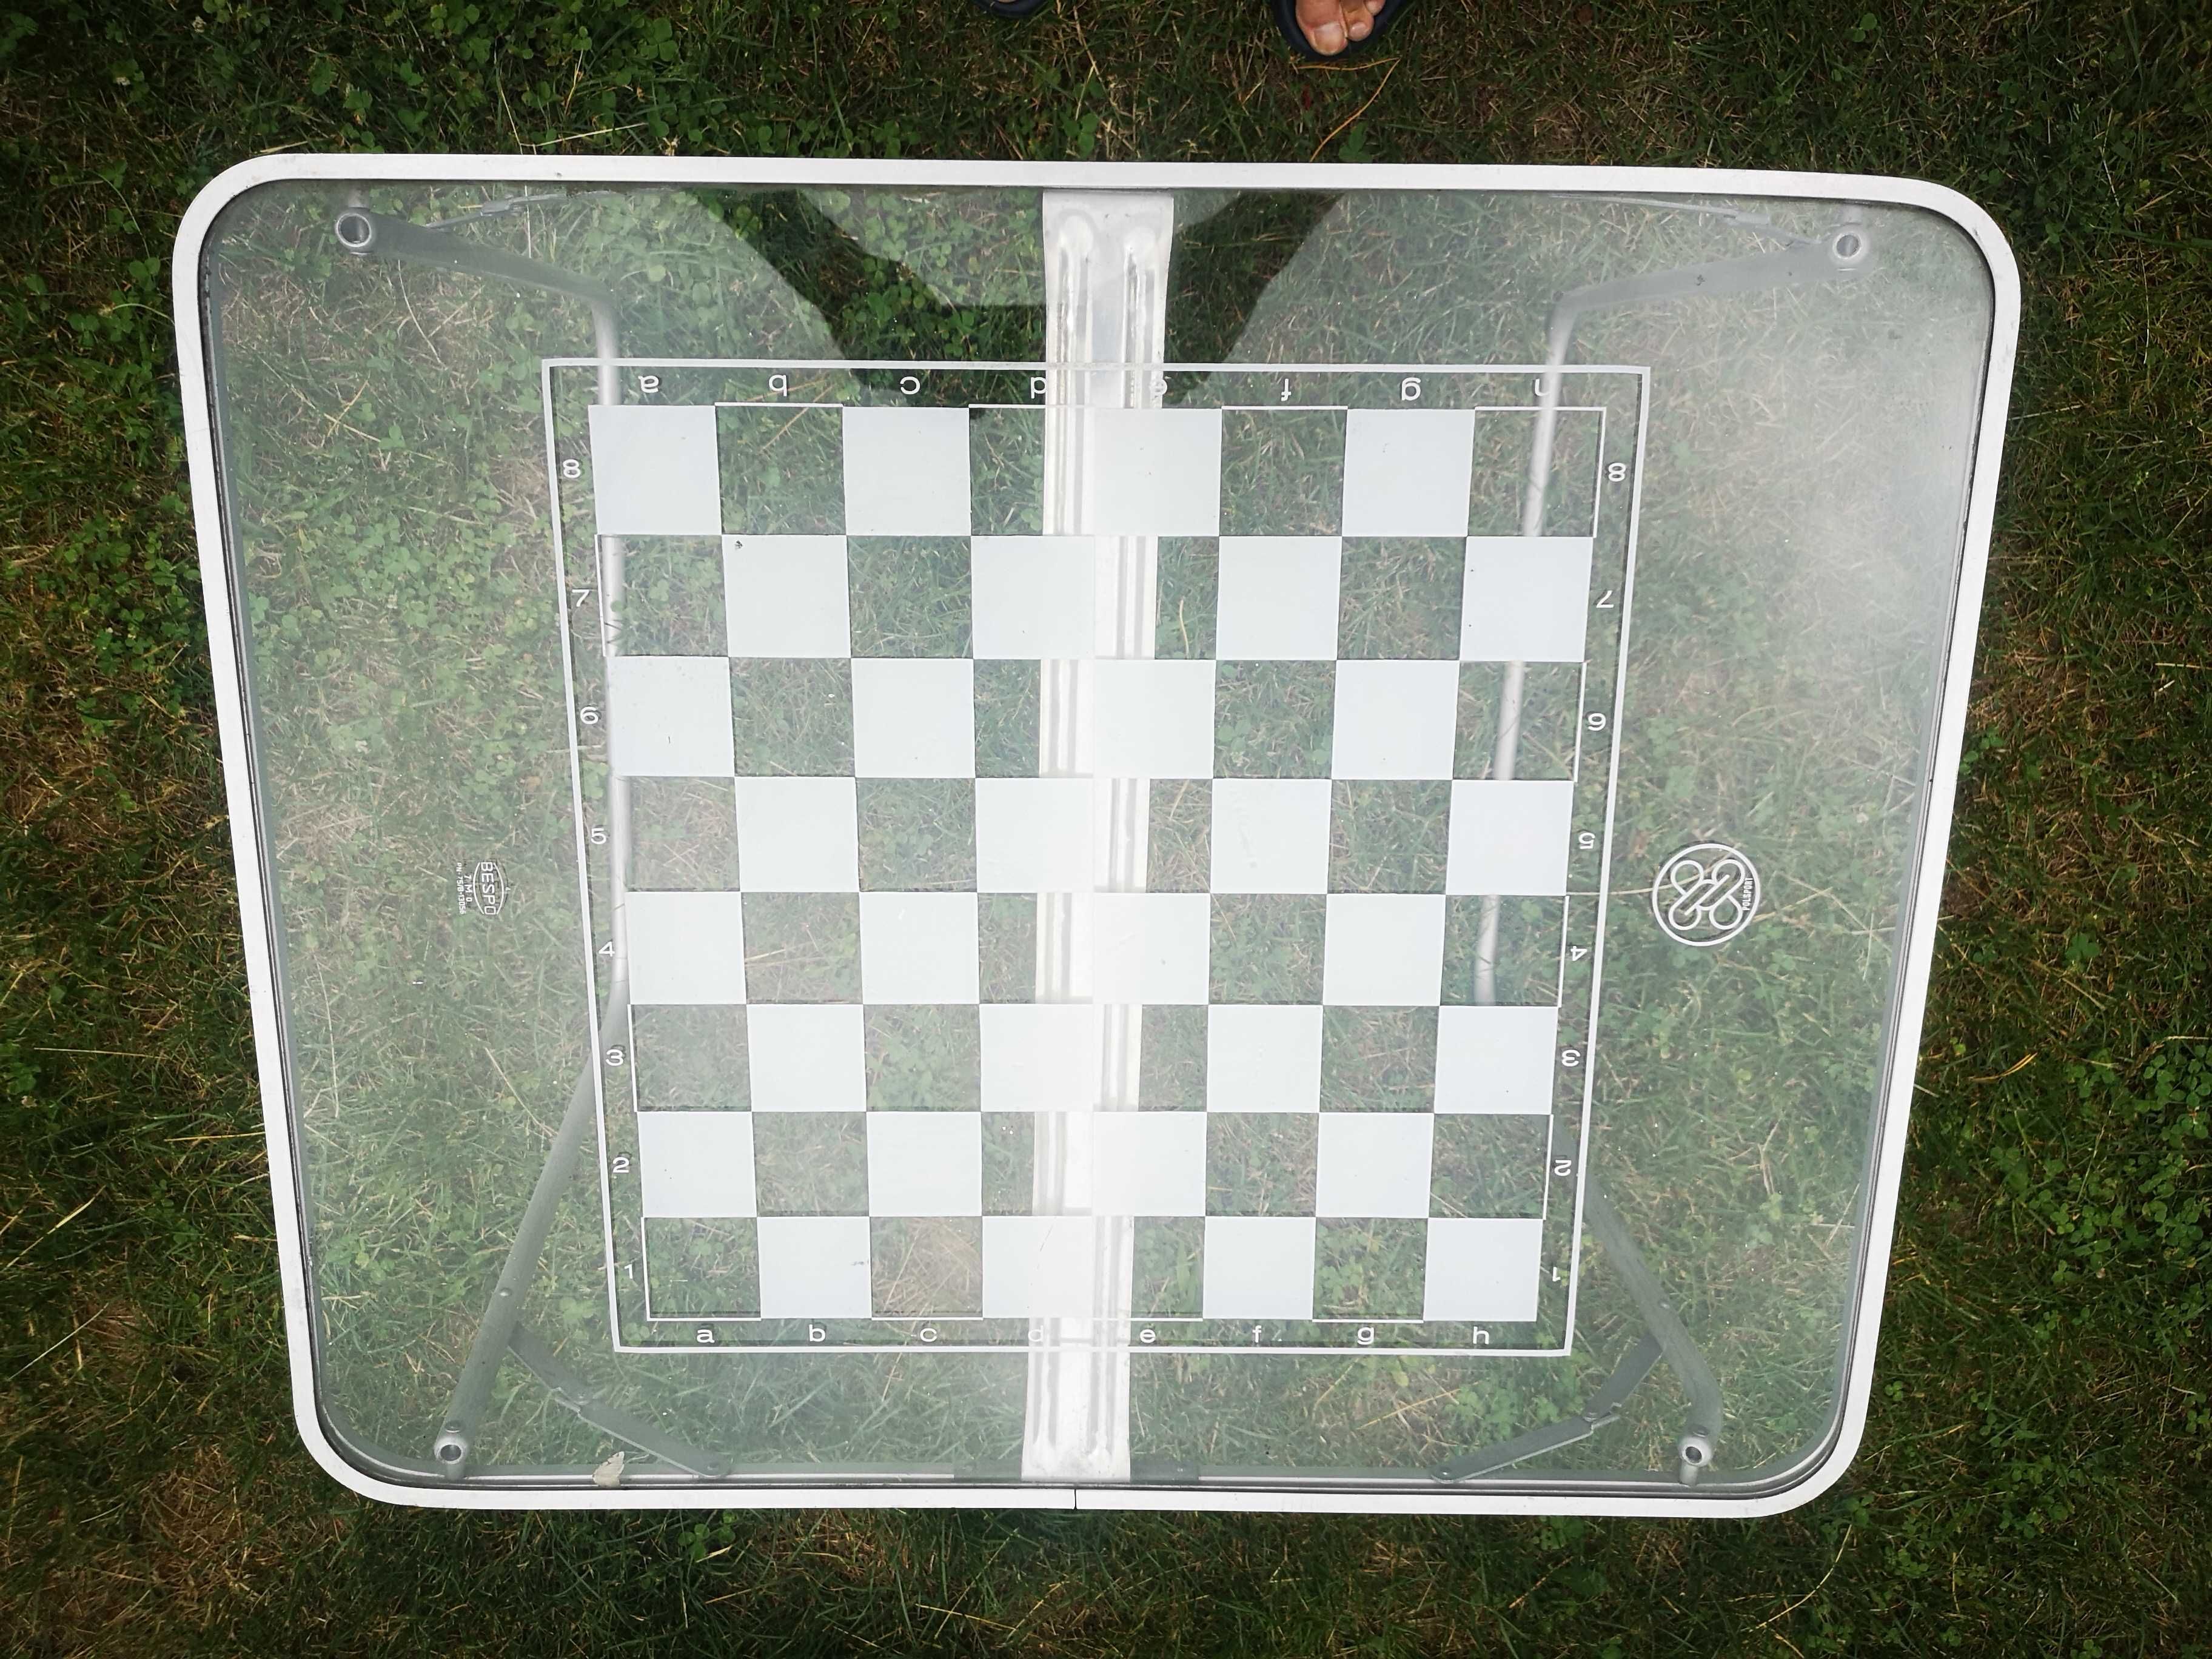 Stolik szklany do szachów składany